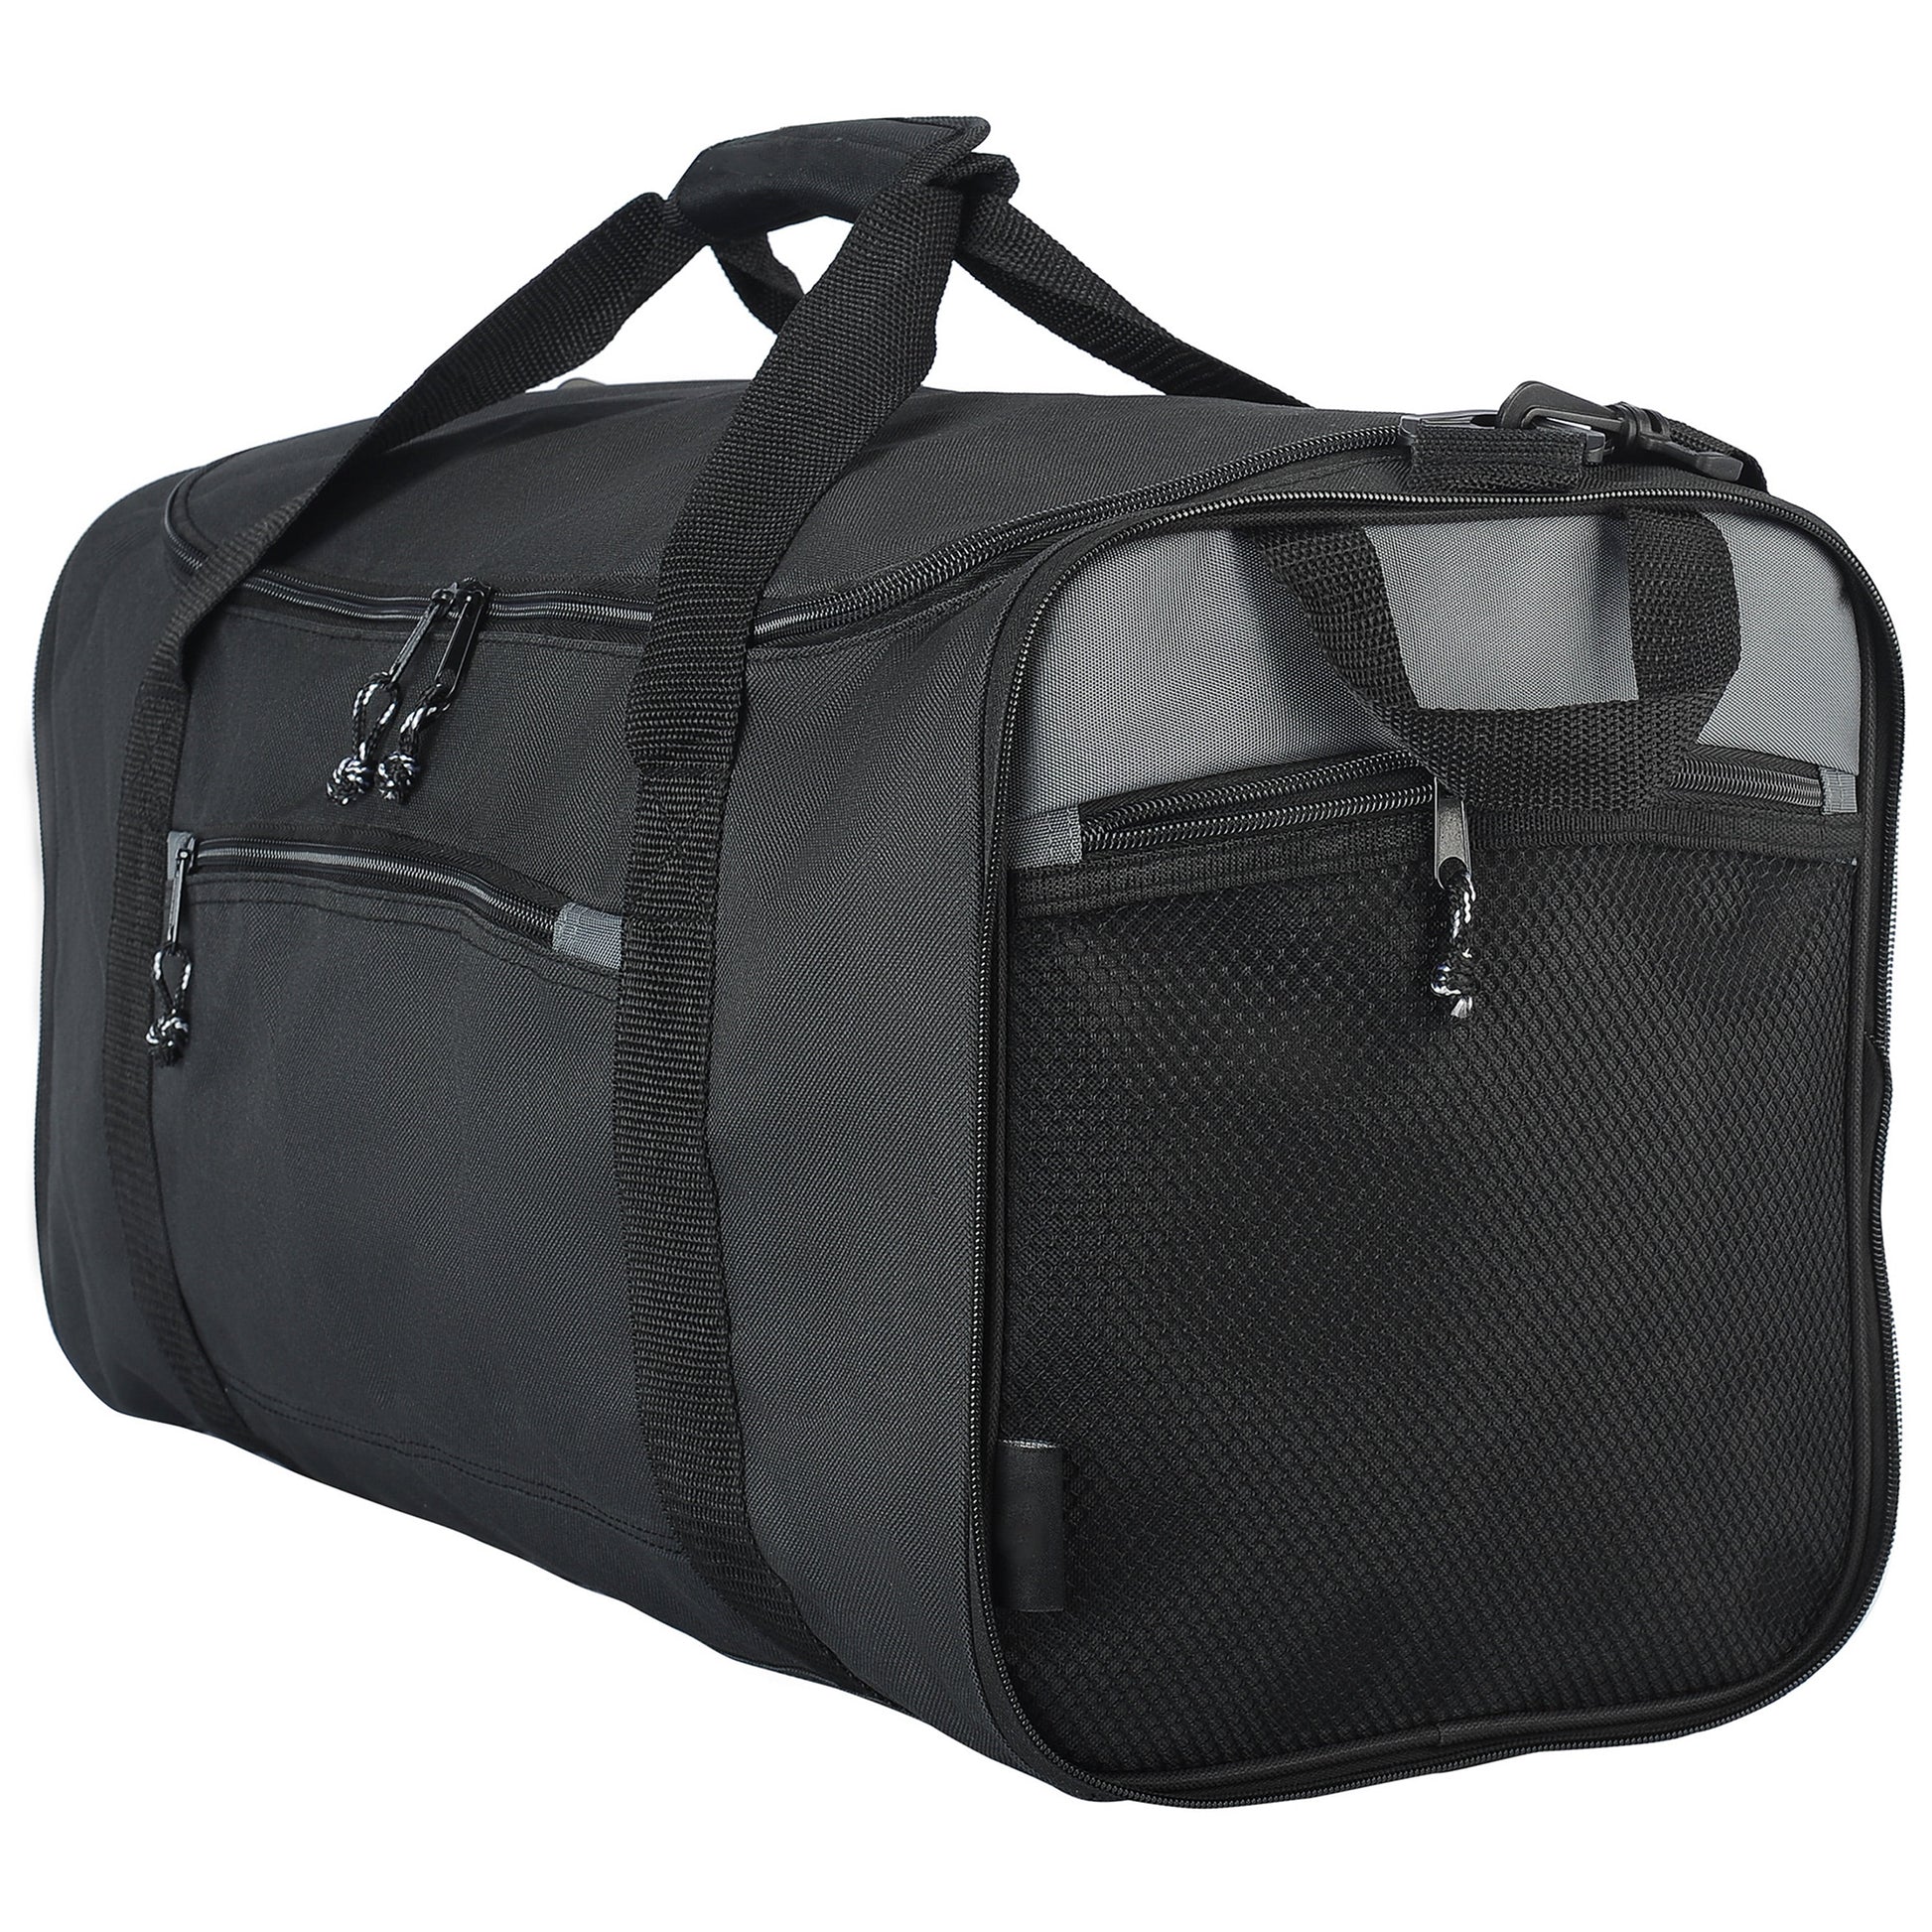 Protege Duffel Bag Backpacks, Bags & Briefcases for Men